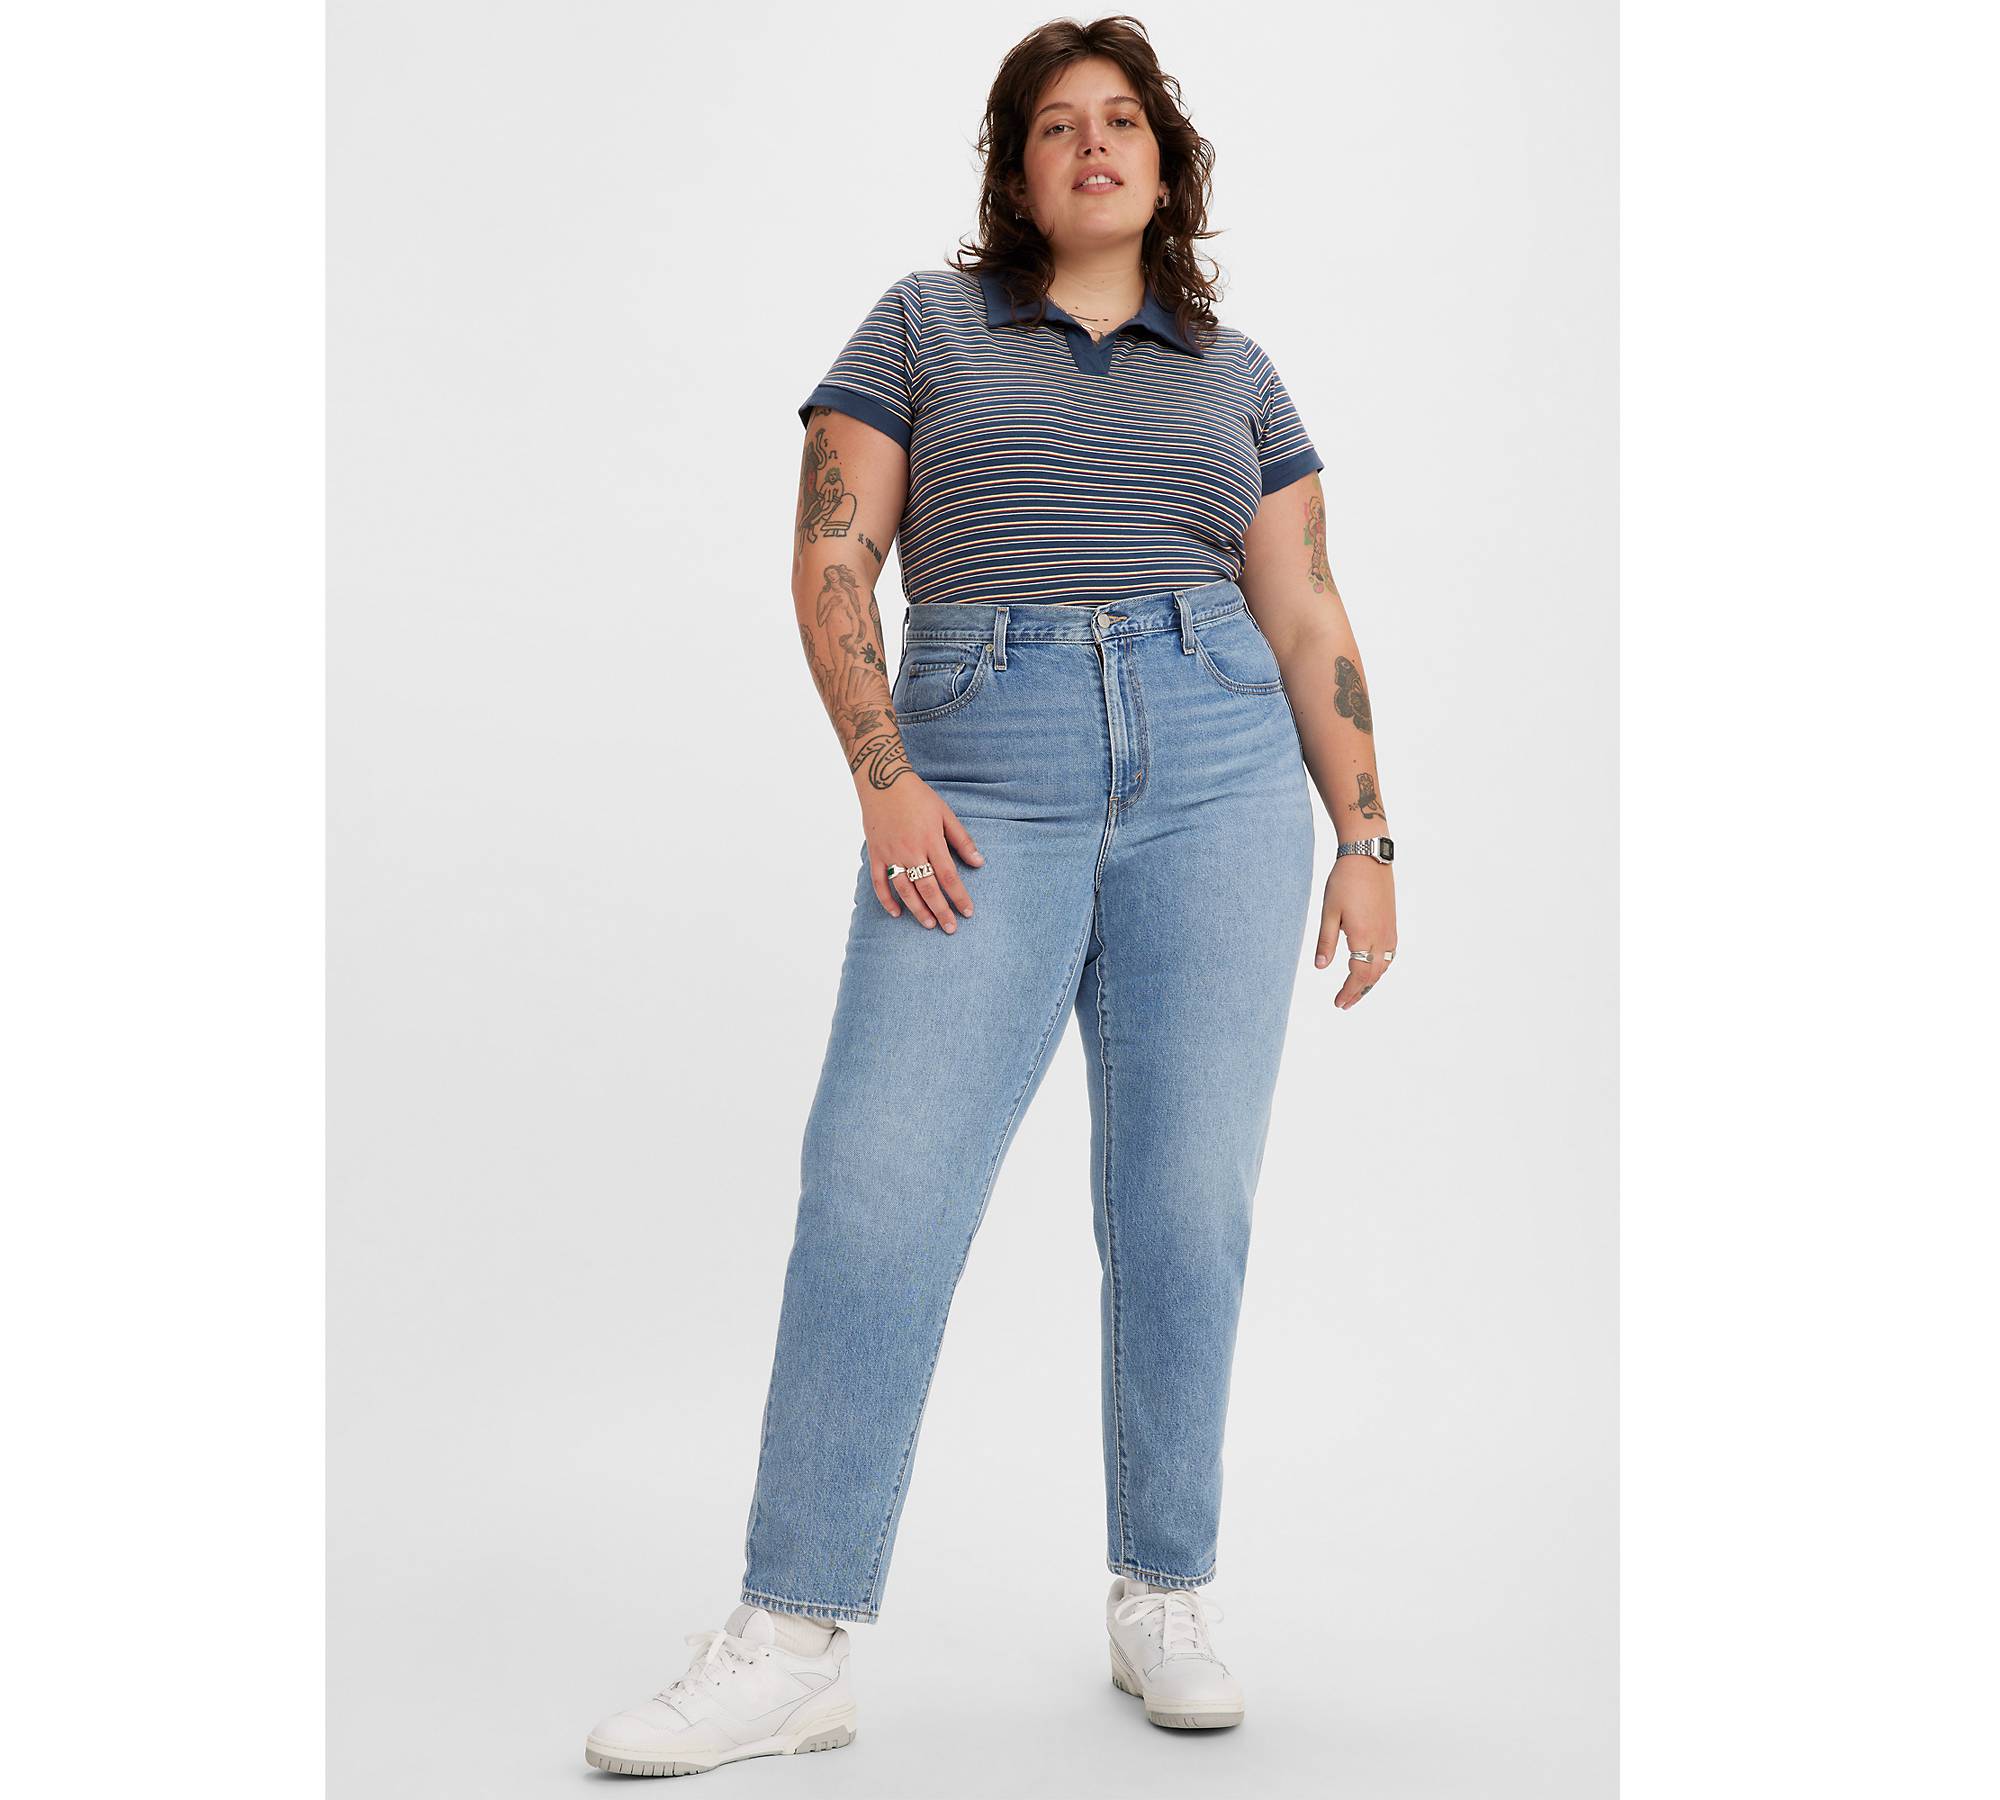 '80s Mom Women's Jeans (Plus Size) 1